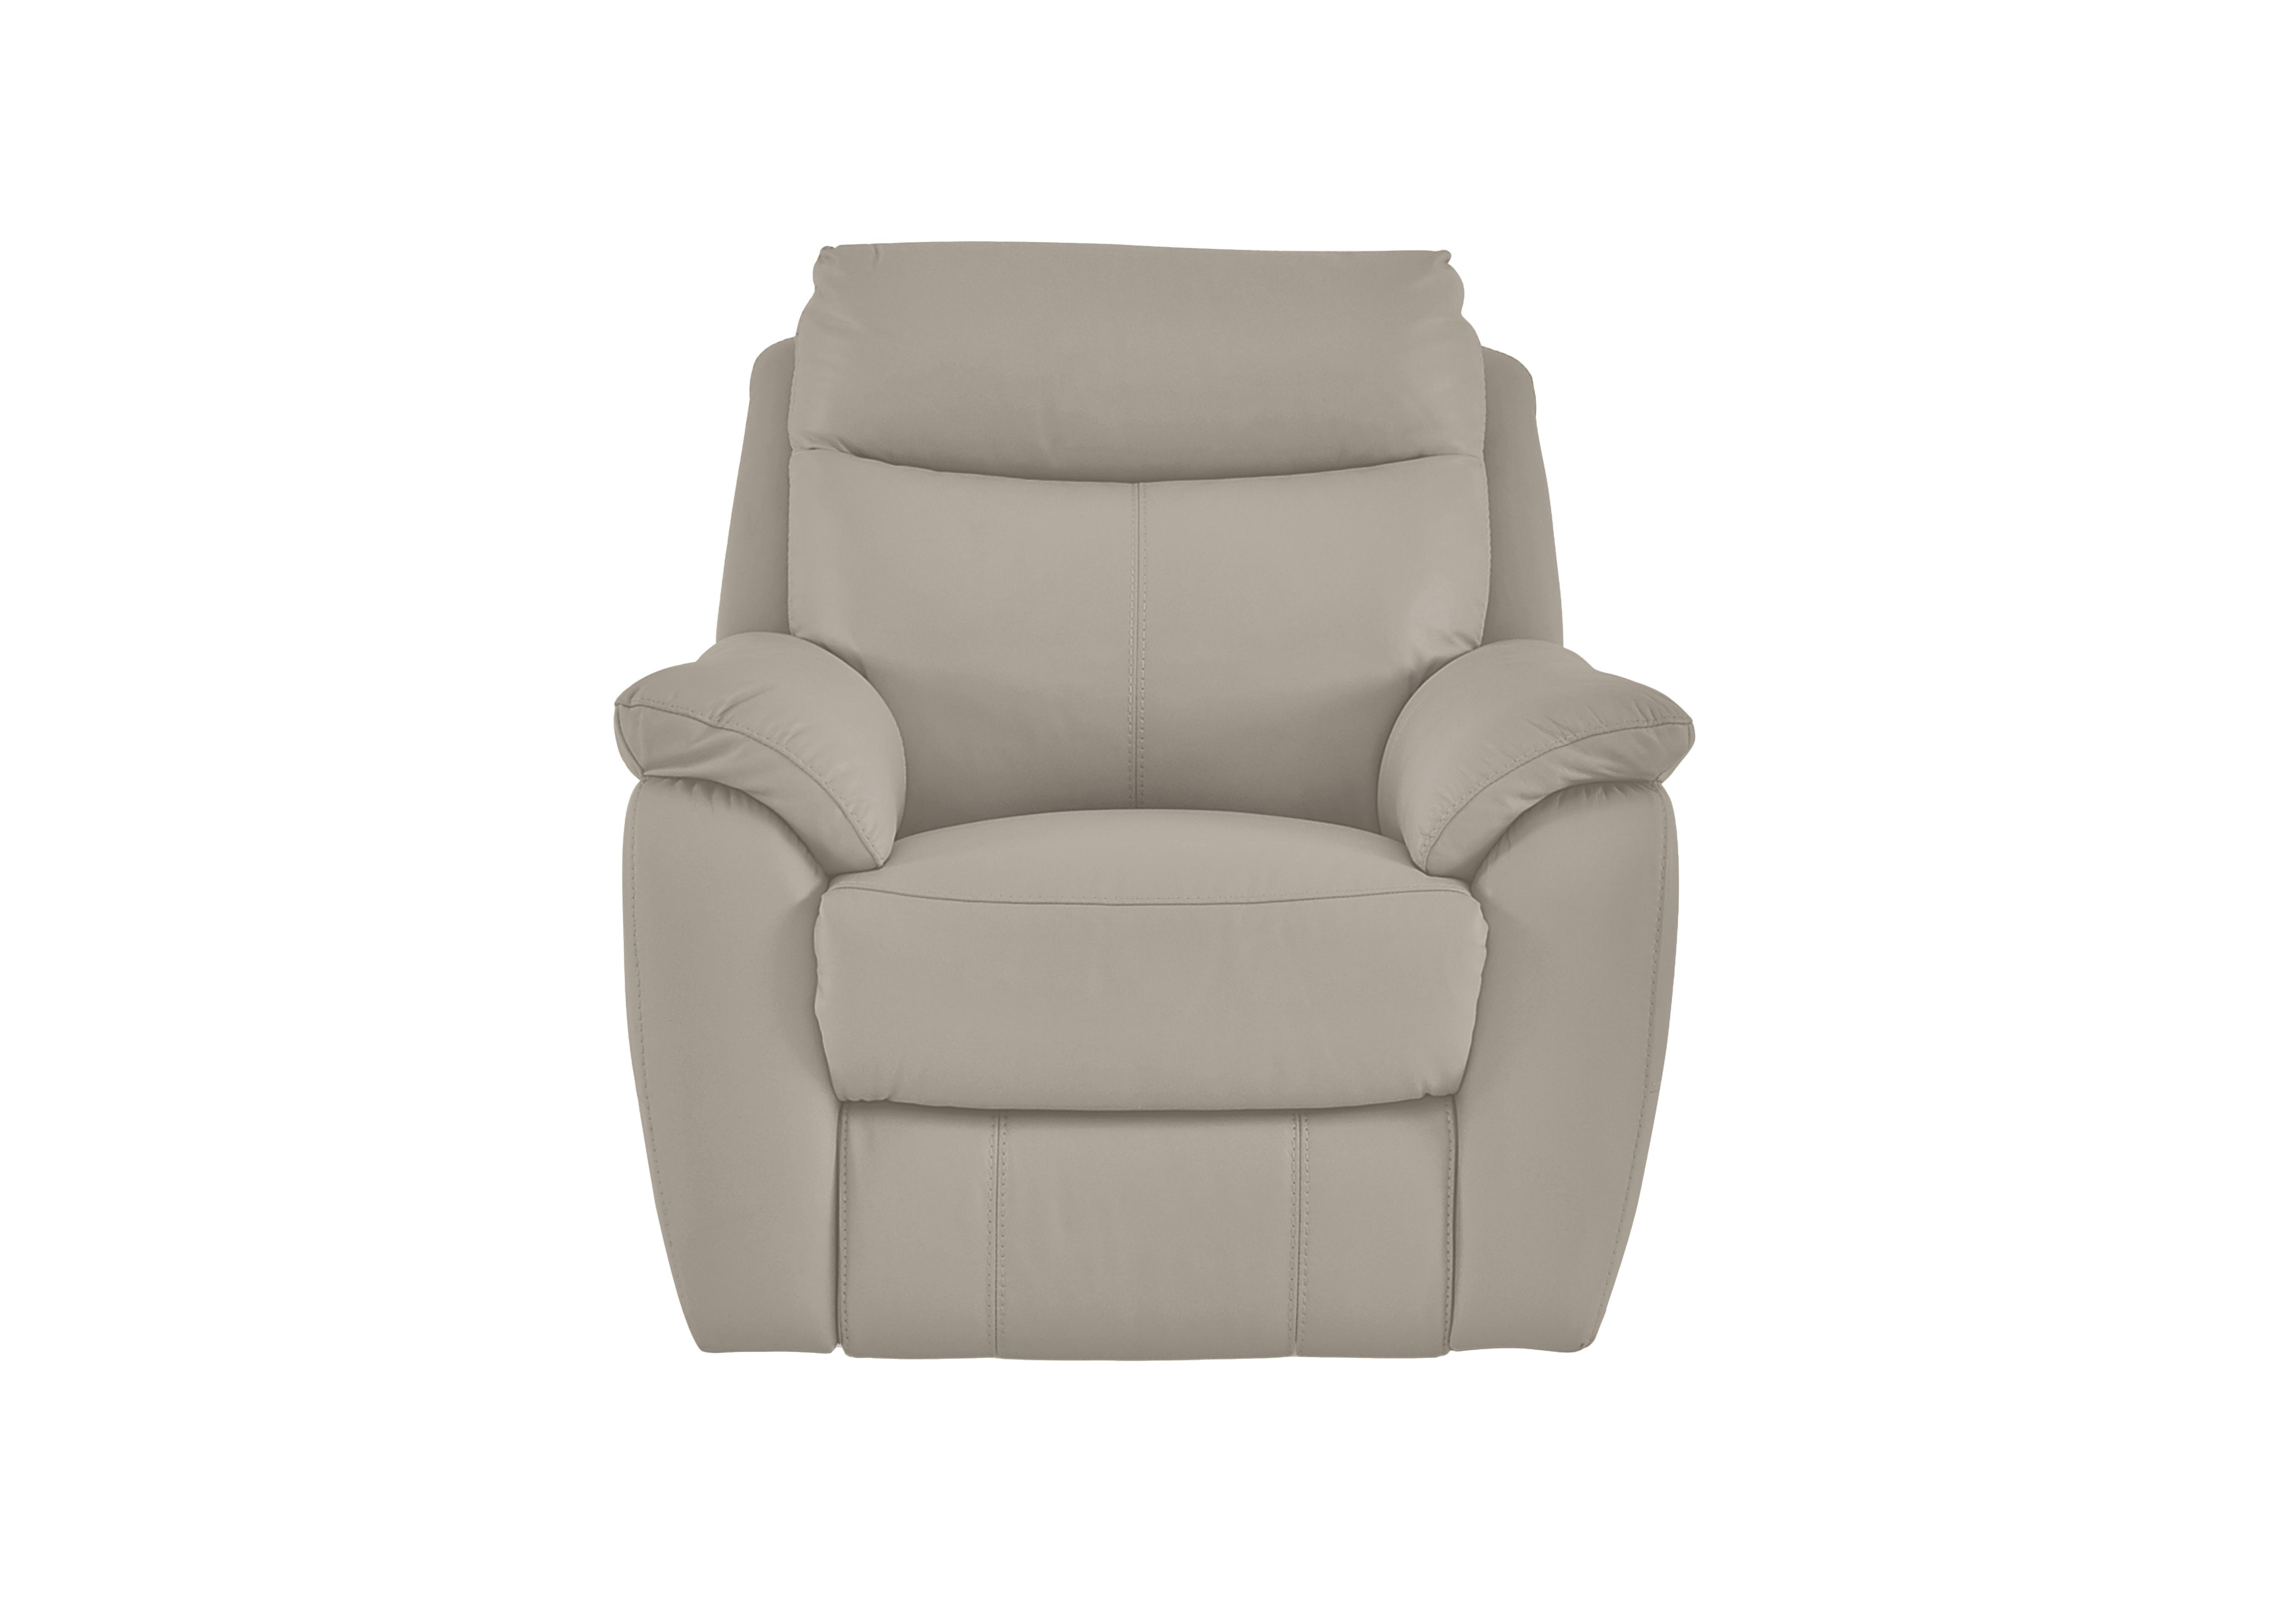 Snug Leather Armchair in Bv-946b Silver Grey on Furniture Village